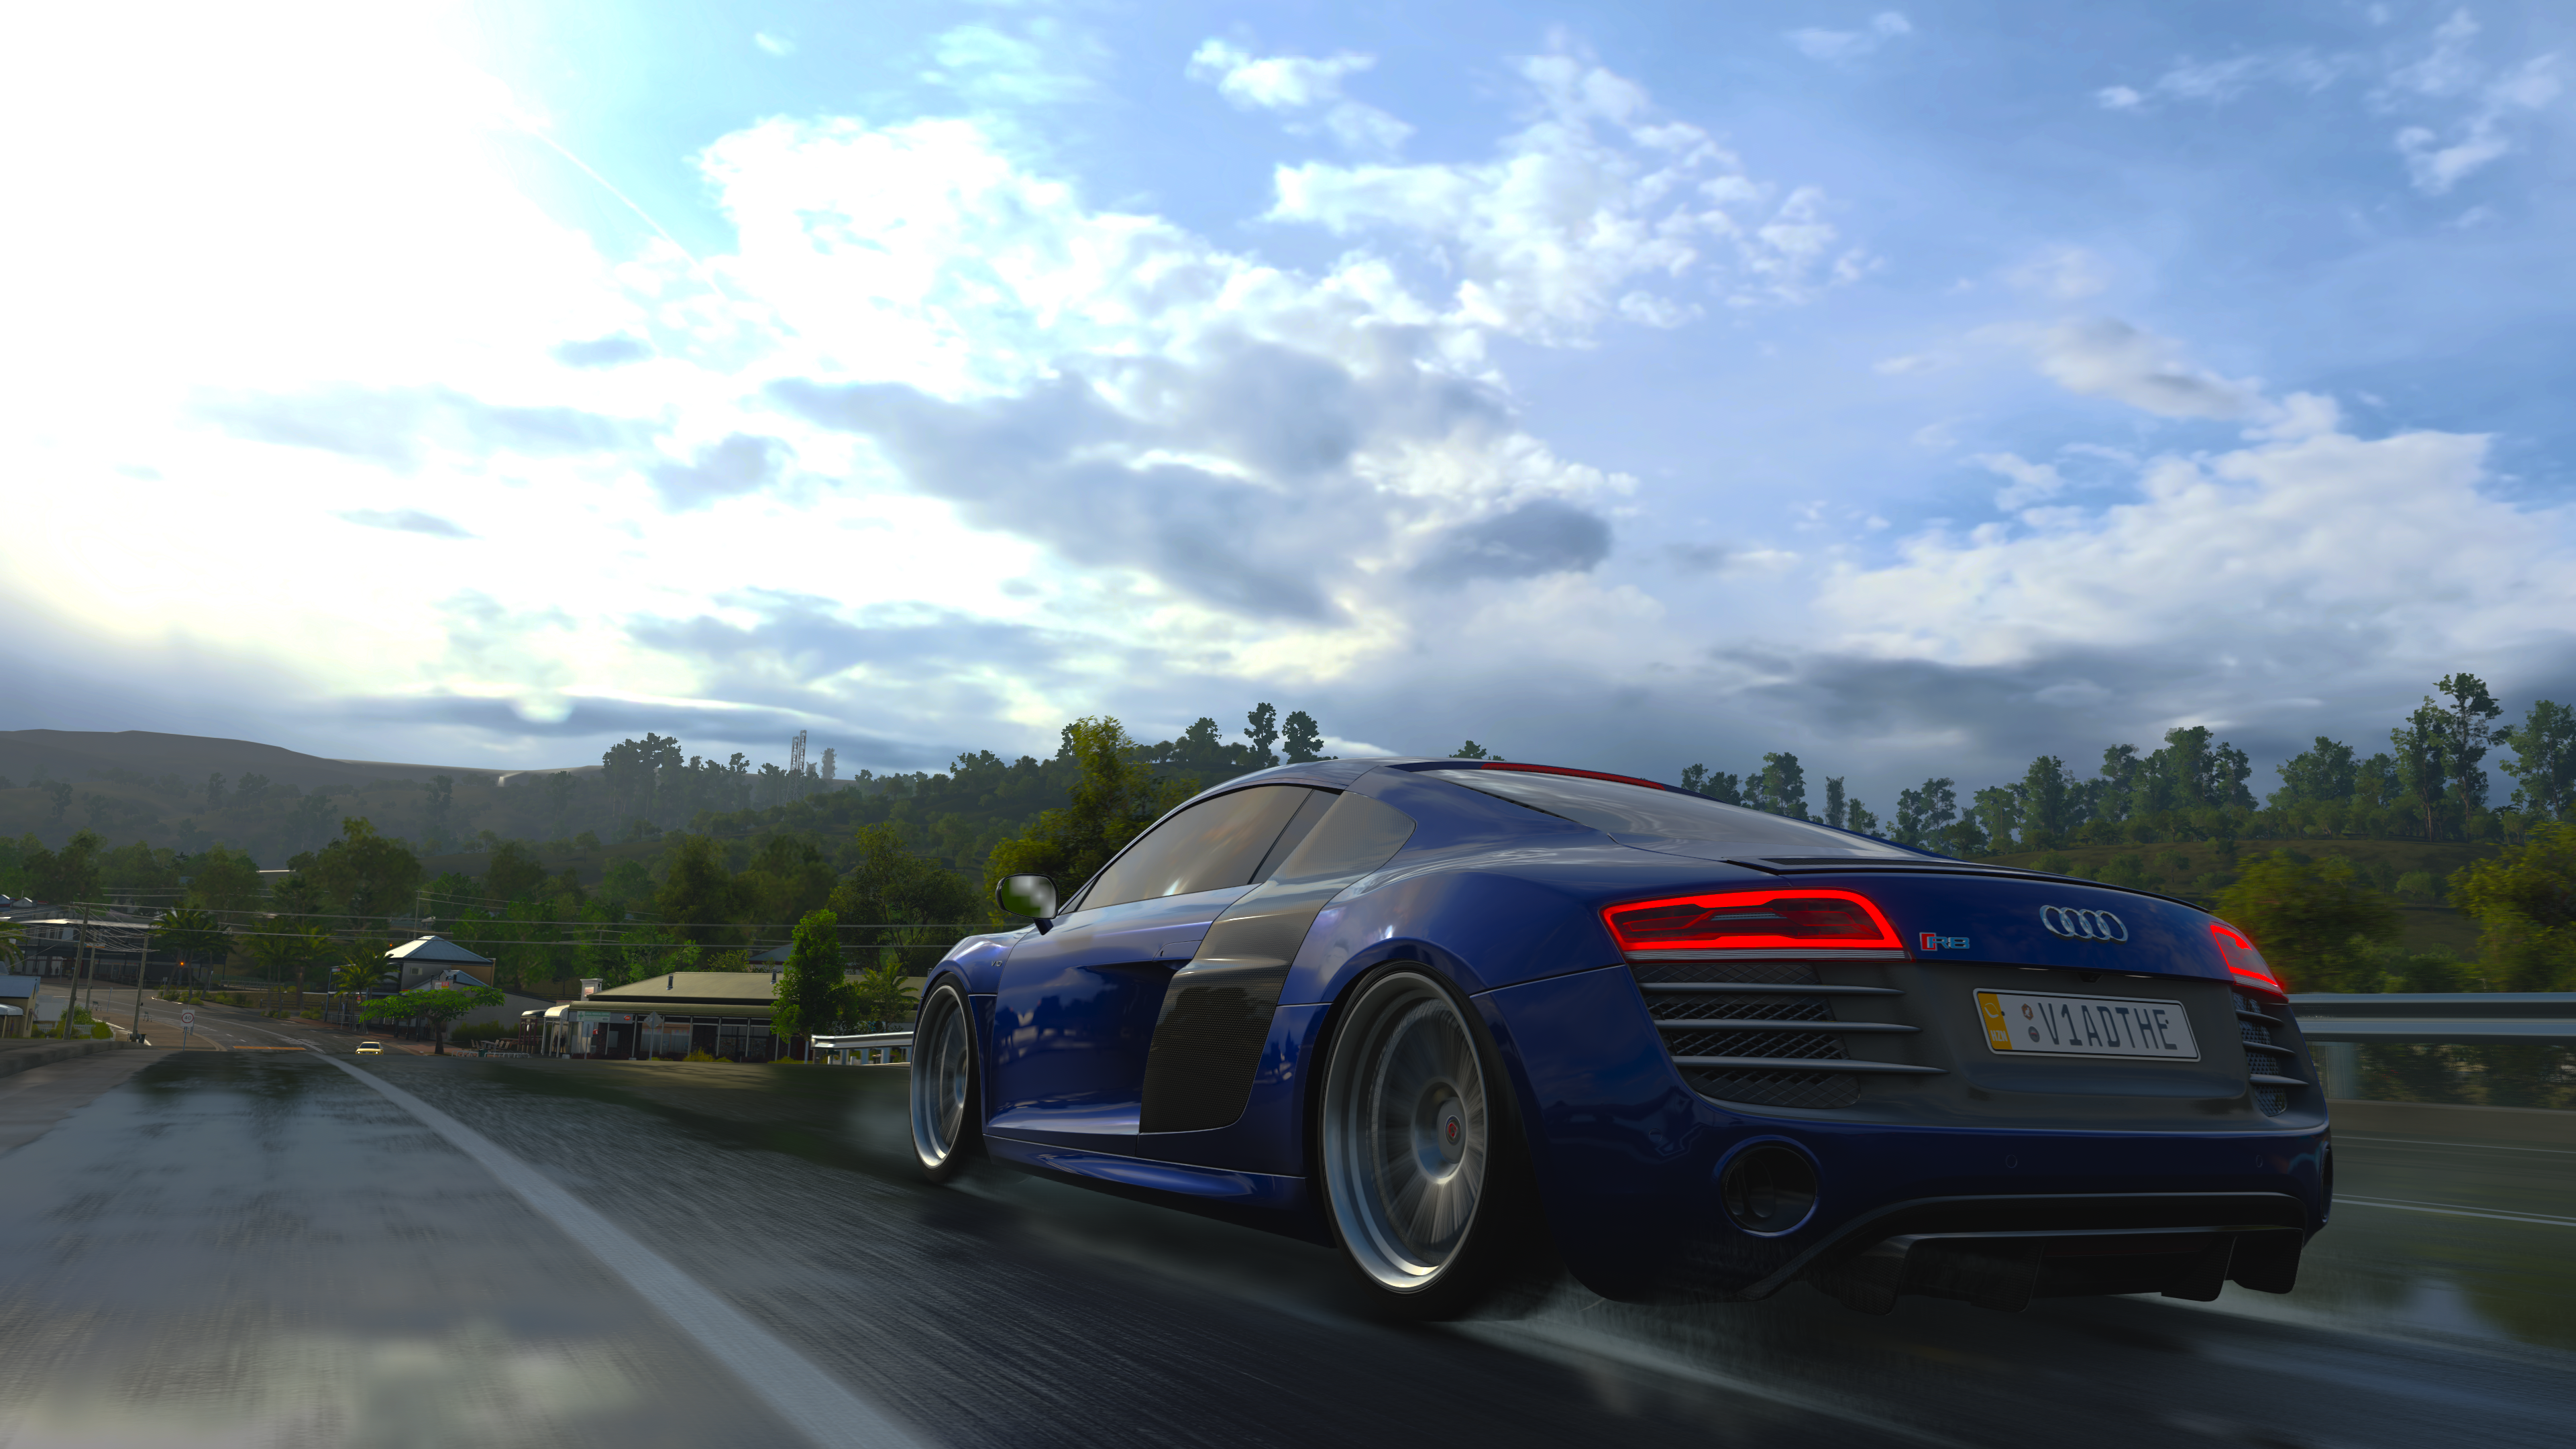 General 3840x2160 Forza Forza Horizon 3 video games Audi R8 Audi car supercars wet road